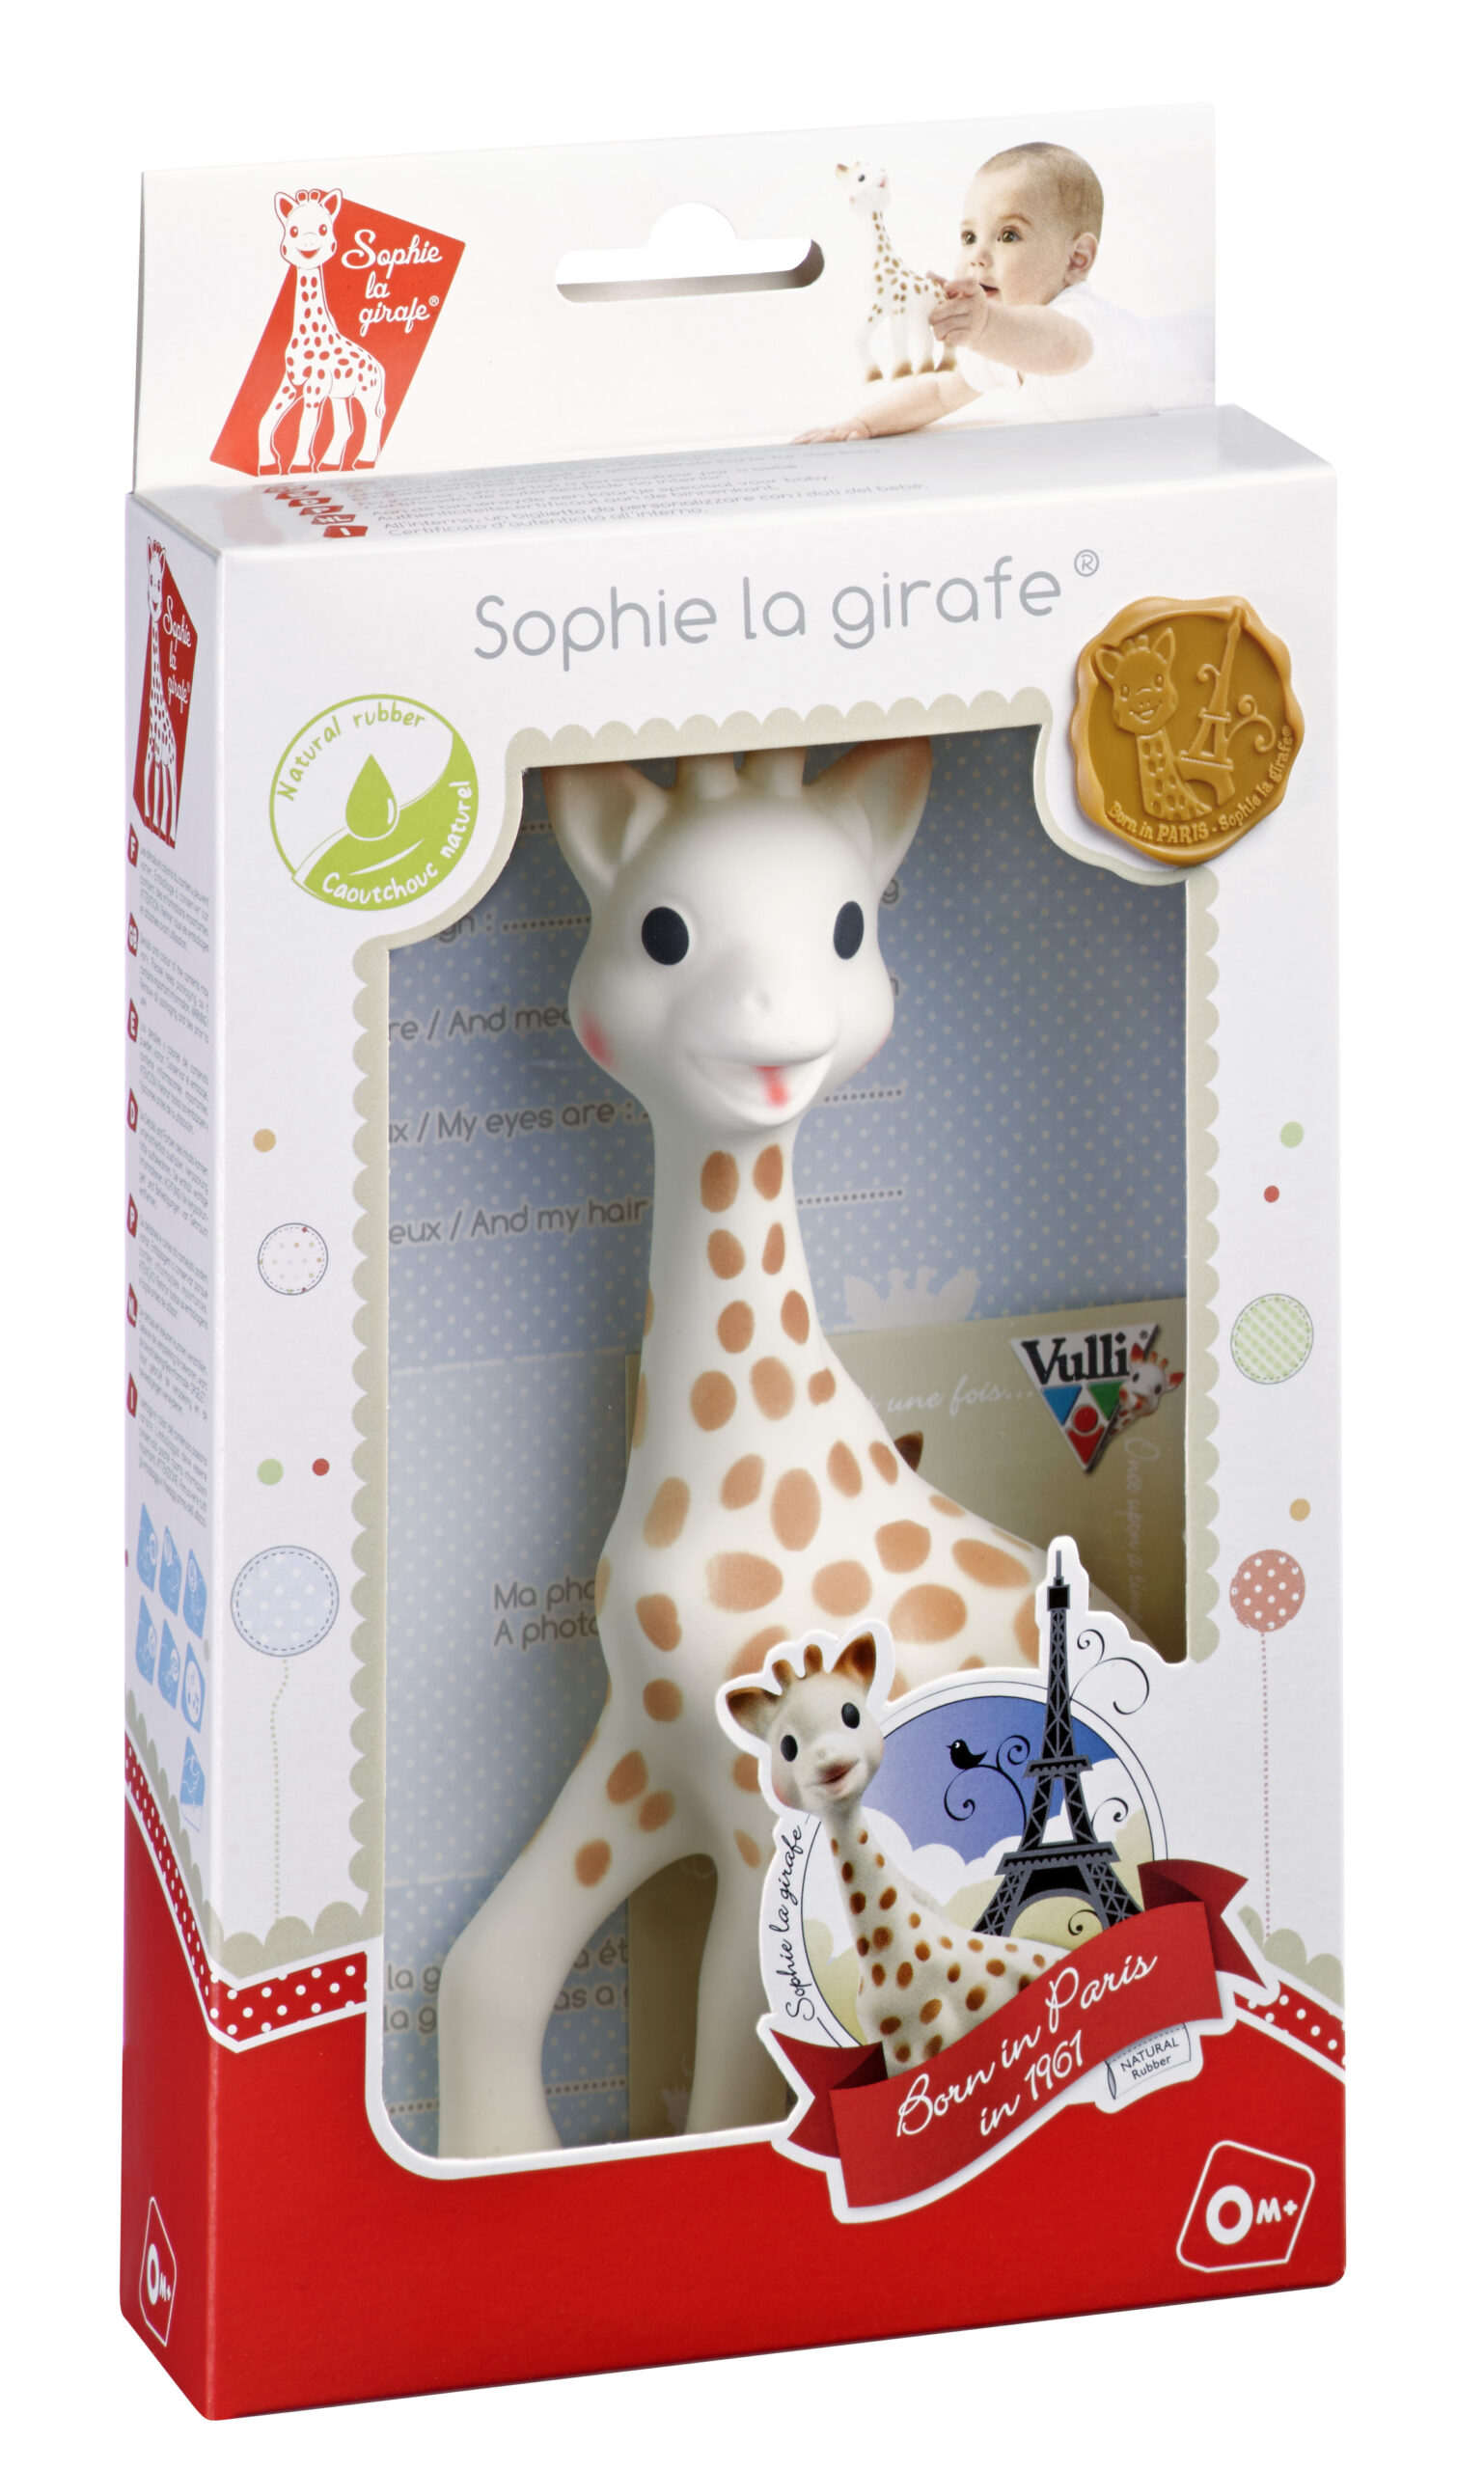 Chaise haute Vision Sophie la girafe